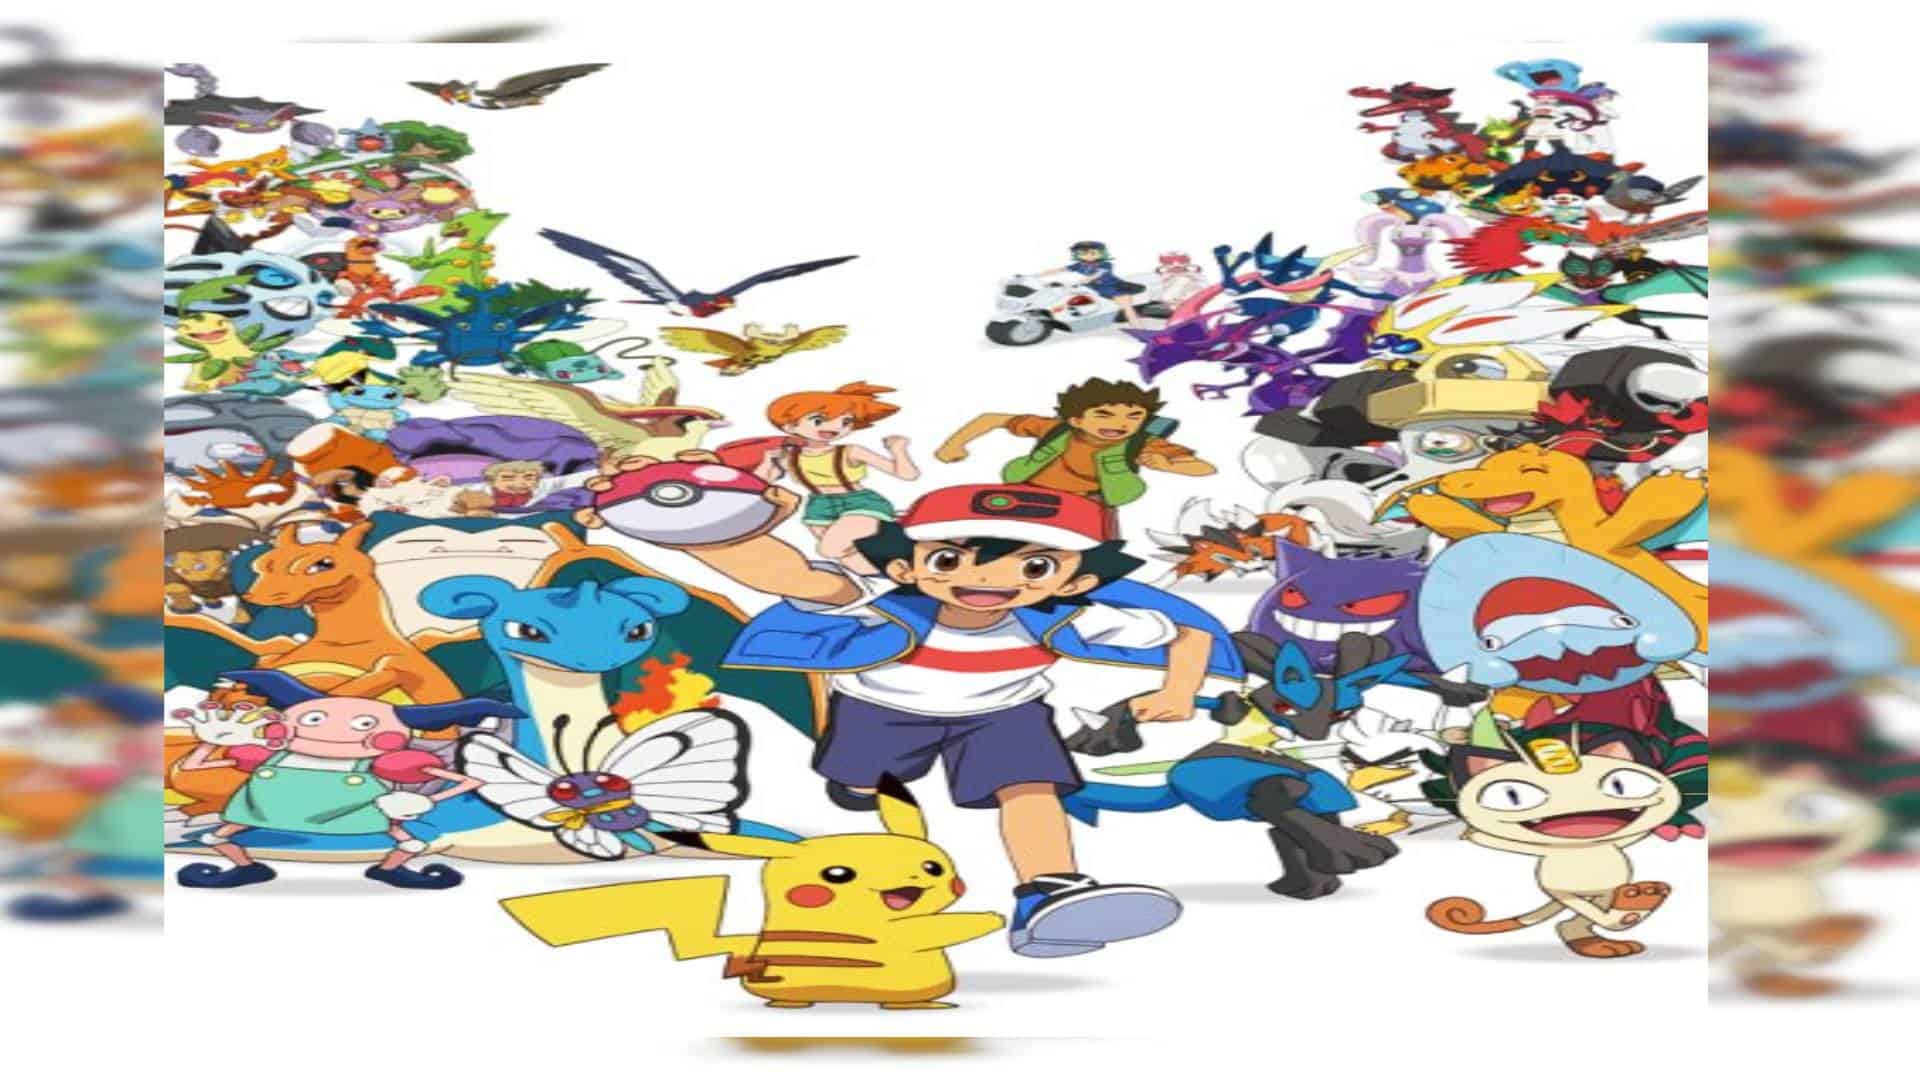 Pokémon Aim to Be a Pokémon Master Episode 1 Release Date